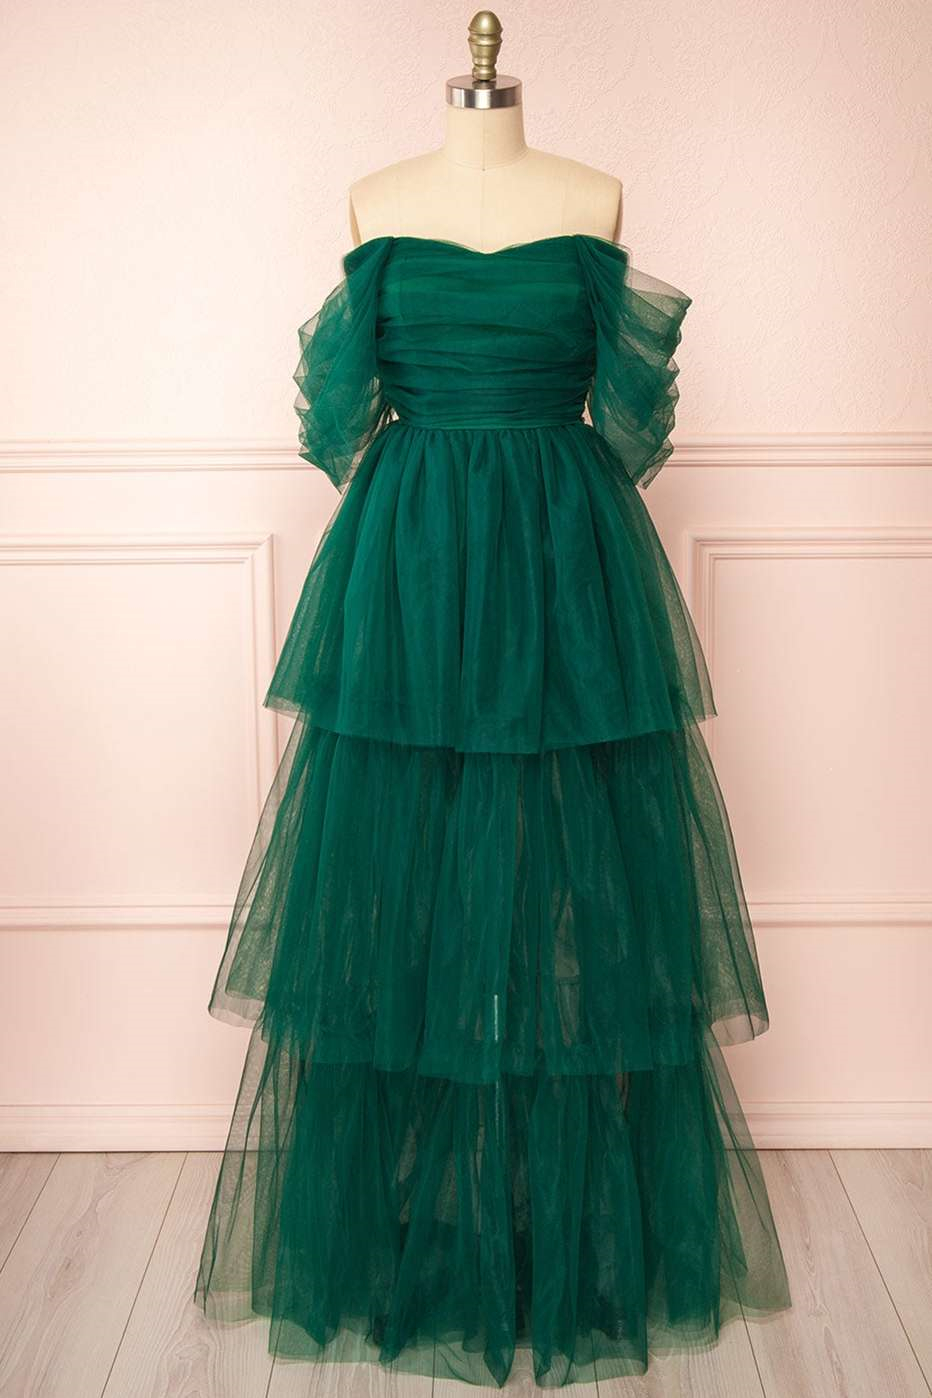 Oknass Charming Dark Green Off the Shoulder Strapless Long Prom Dress With Cake Tulle